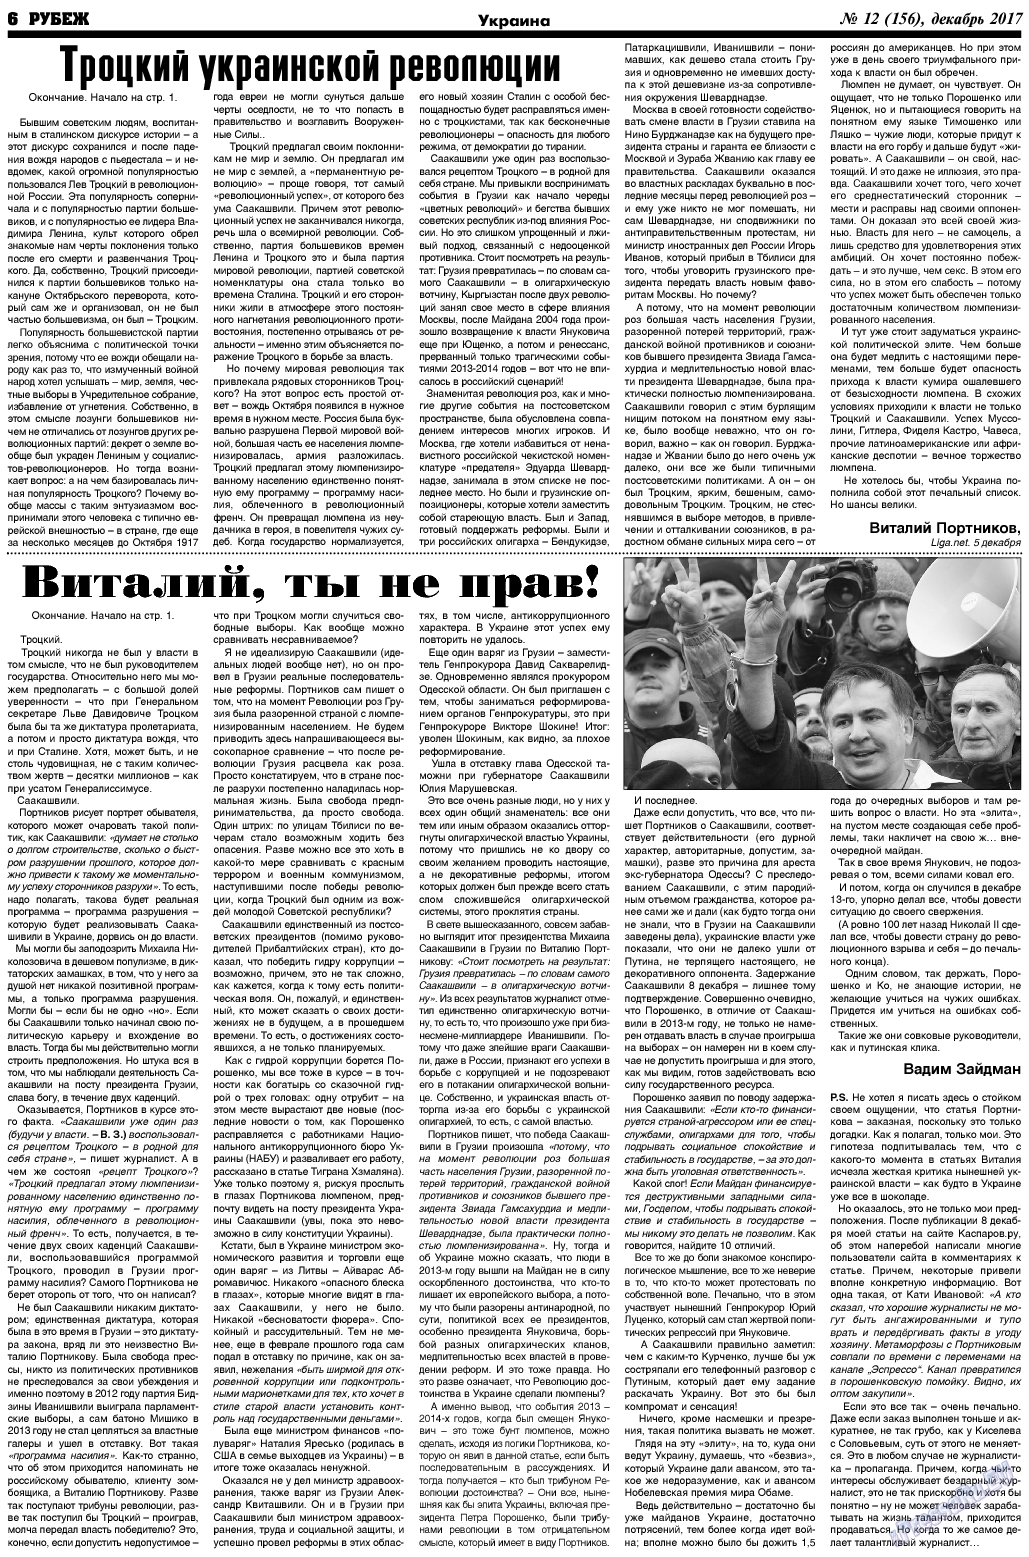 Рубеж, газета. 2017 №12 стр.6